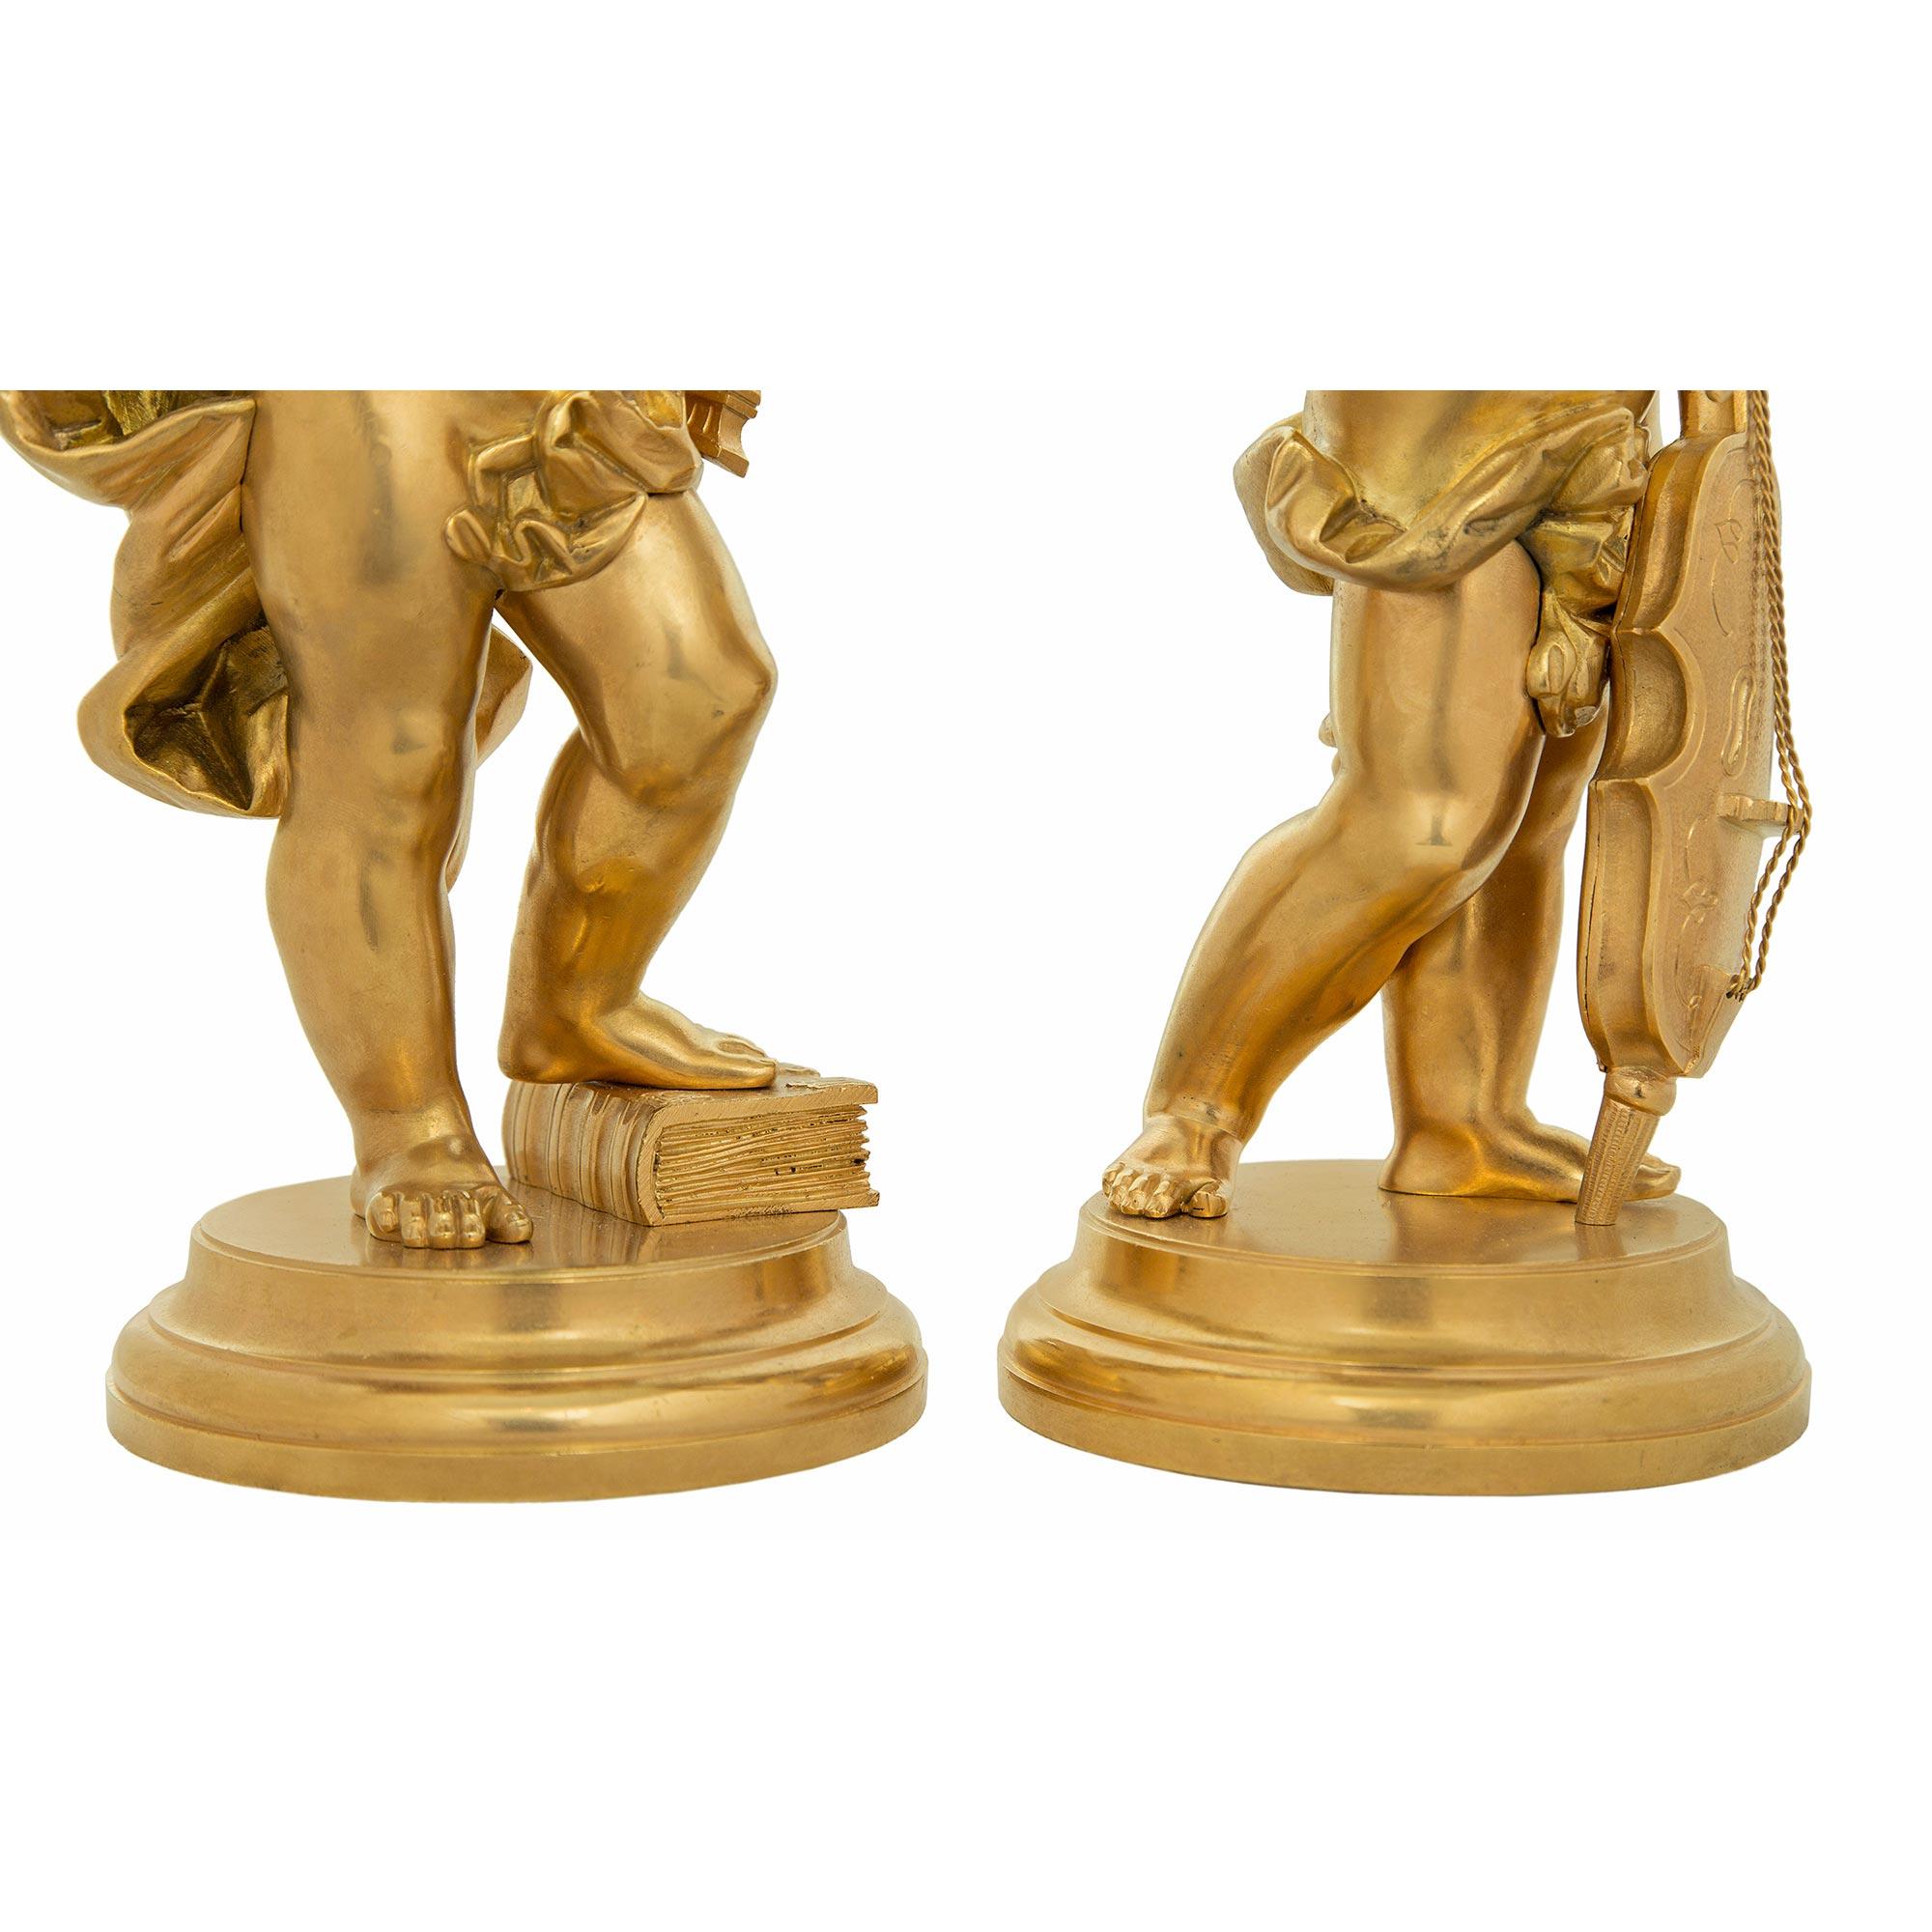 Pair of French 19th Century Louis XVI Style Ormolu Cherub Statues For Sale 3